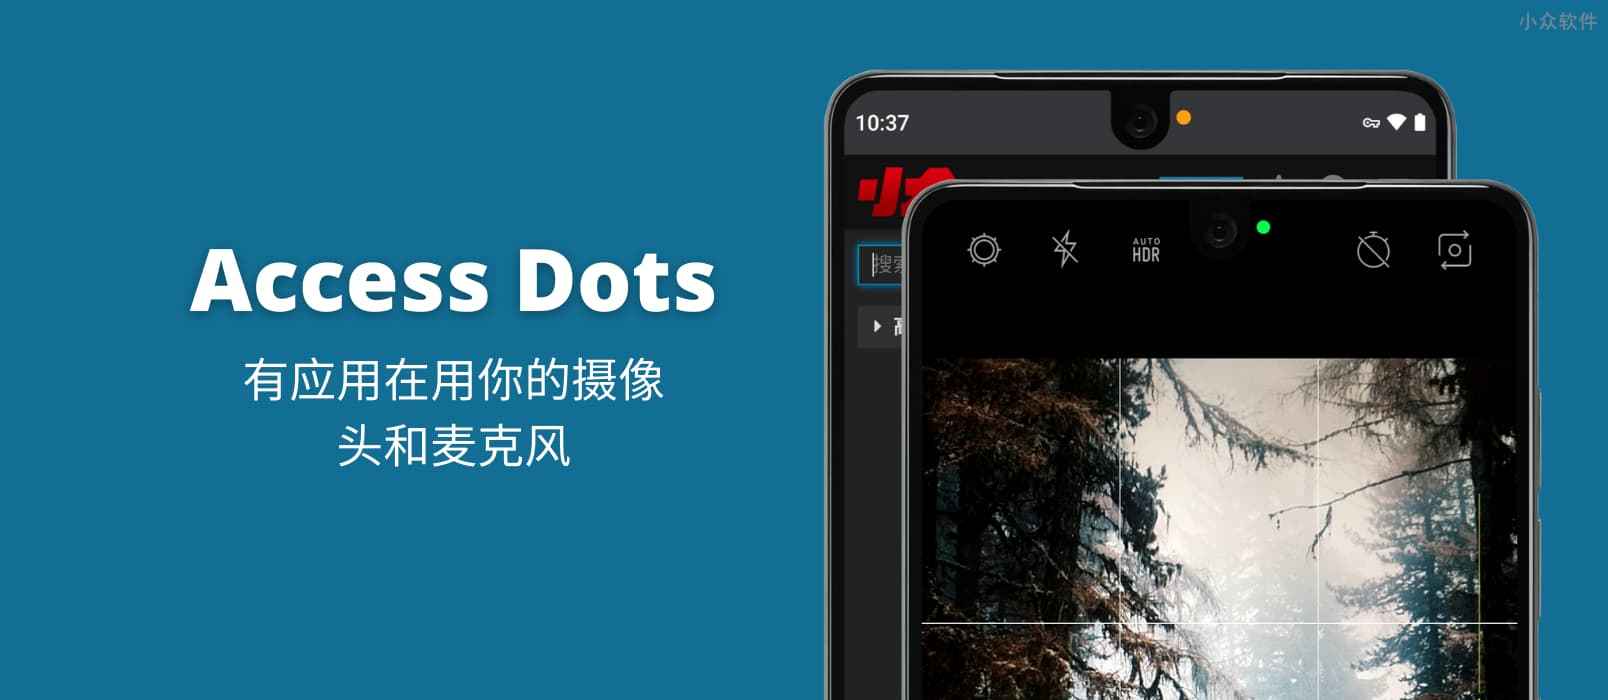 Access Dots -  实时提醒，有应用正在用你的摄像头和麦克风[Android]